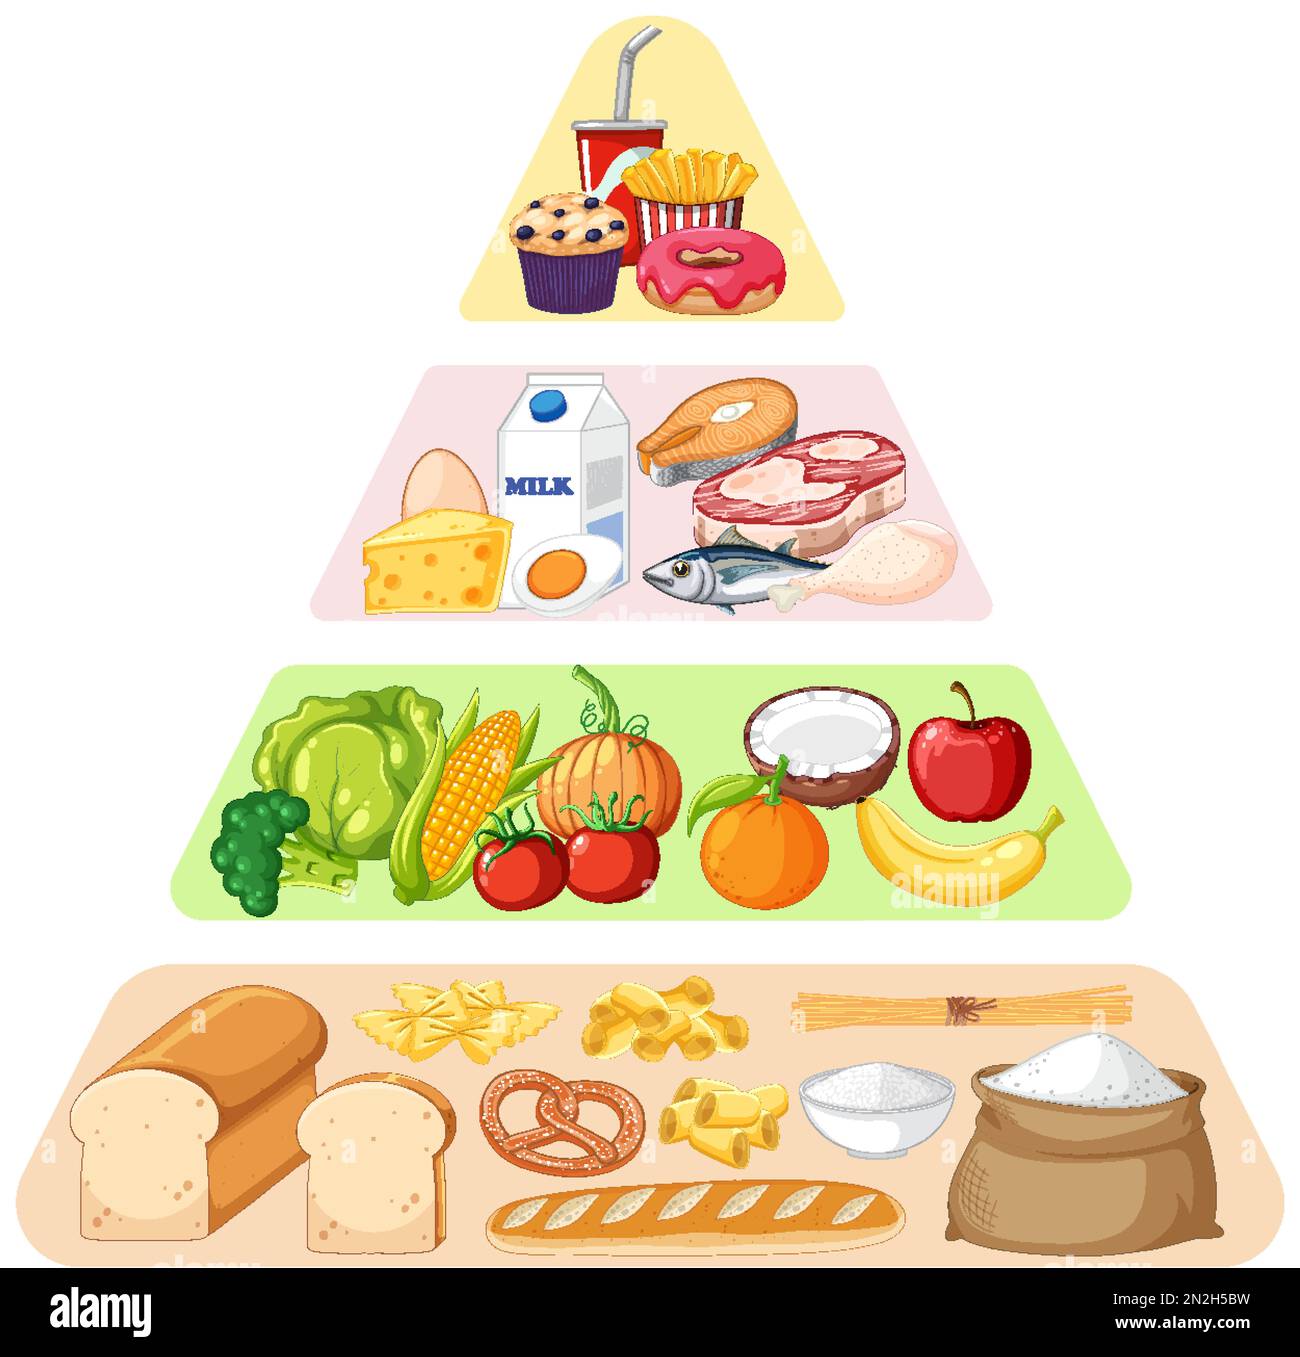 Food nutrition groups pyramid illustration Stock Vector Image & Art - Alamy